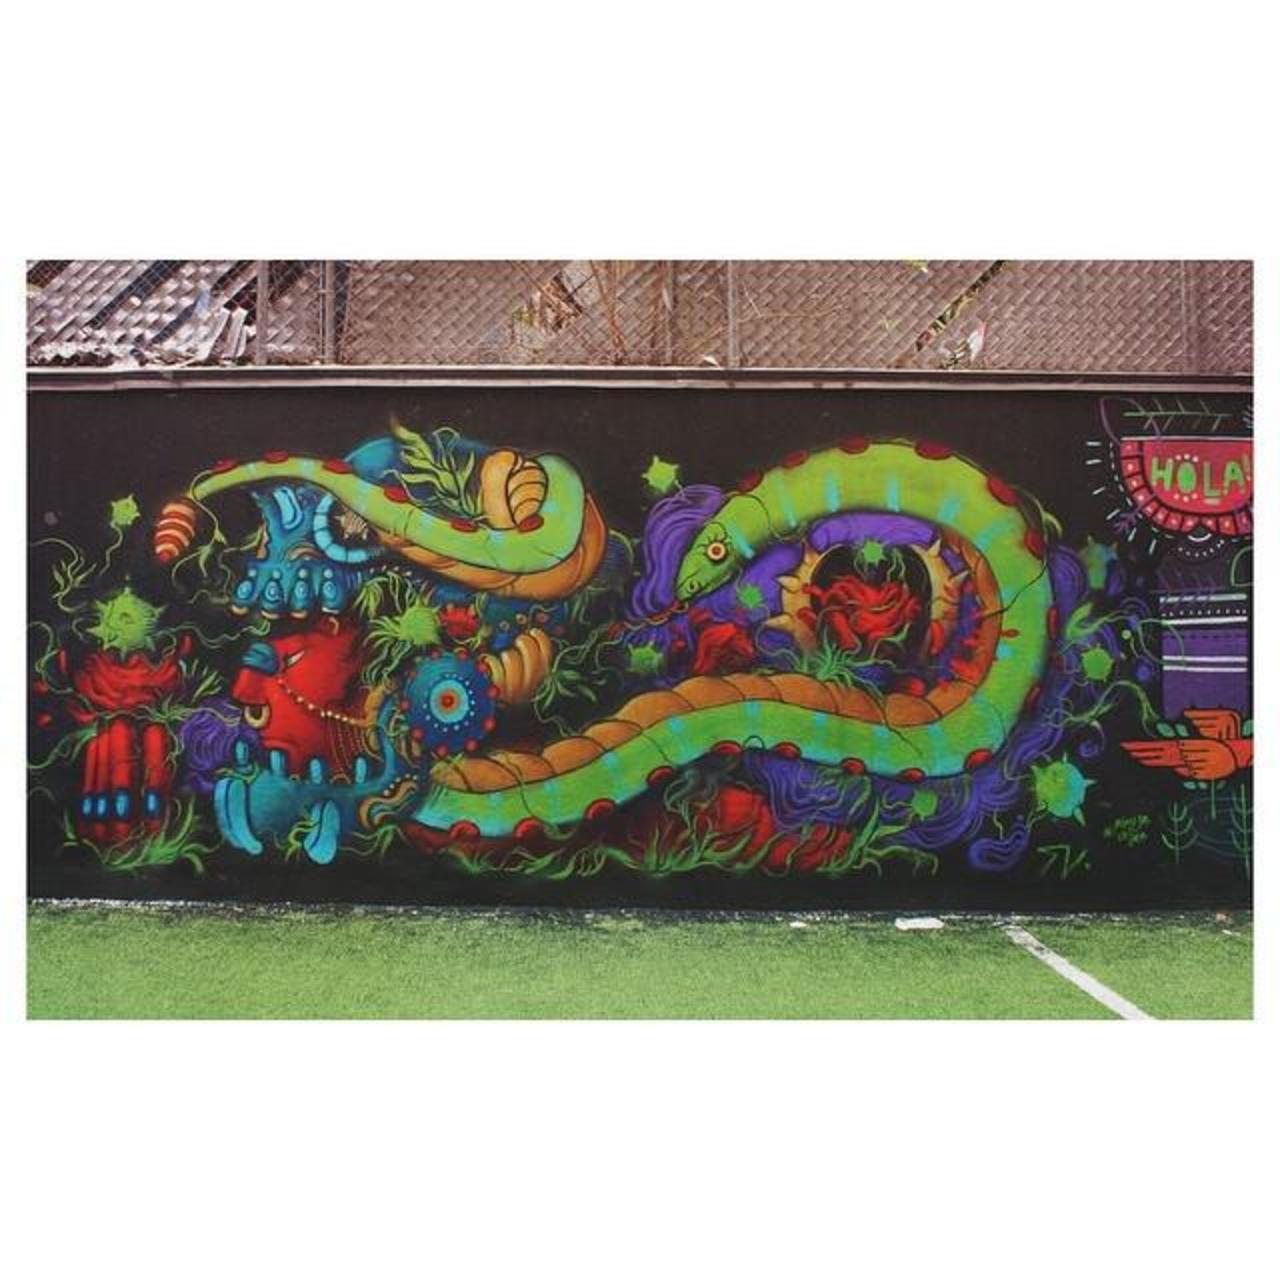 Red Monster | #RaulUrias #Urban #UrbanArt #StreetArt #Art #Mural #Graffiti #Spray #StreetArtChilango #StreetArtMexi… http://t.co/4LyzhAXjqZ